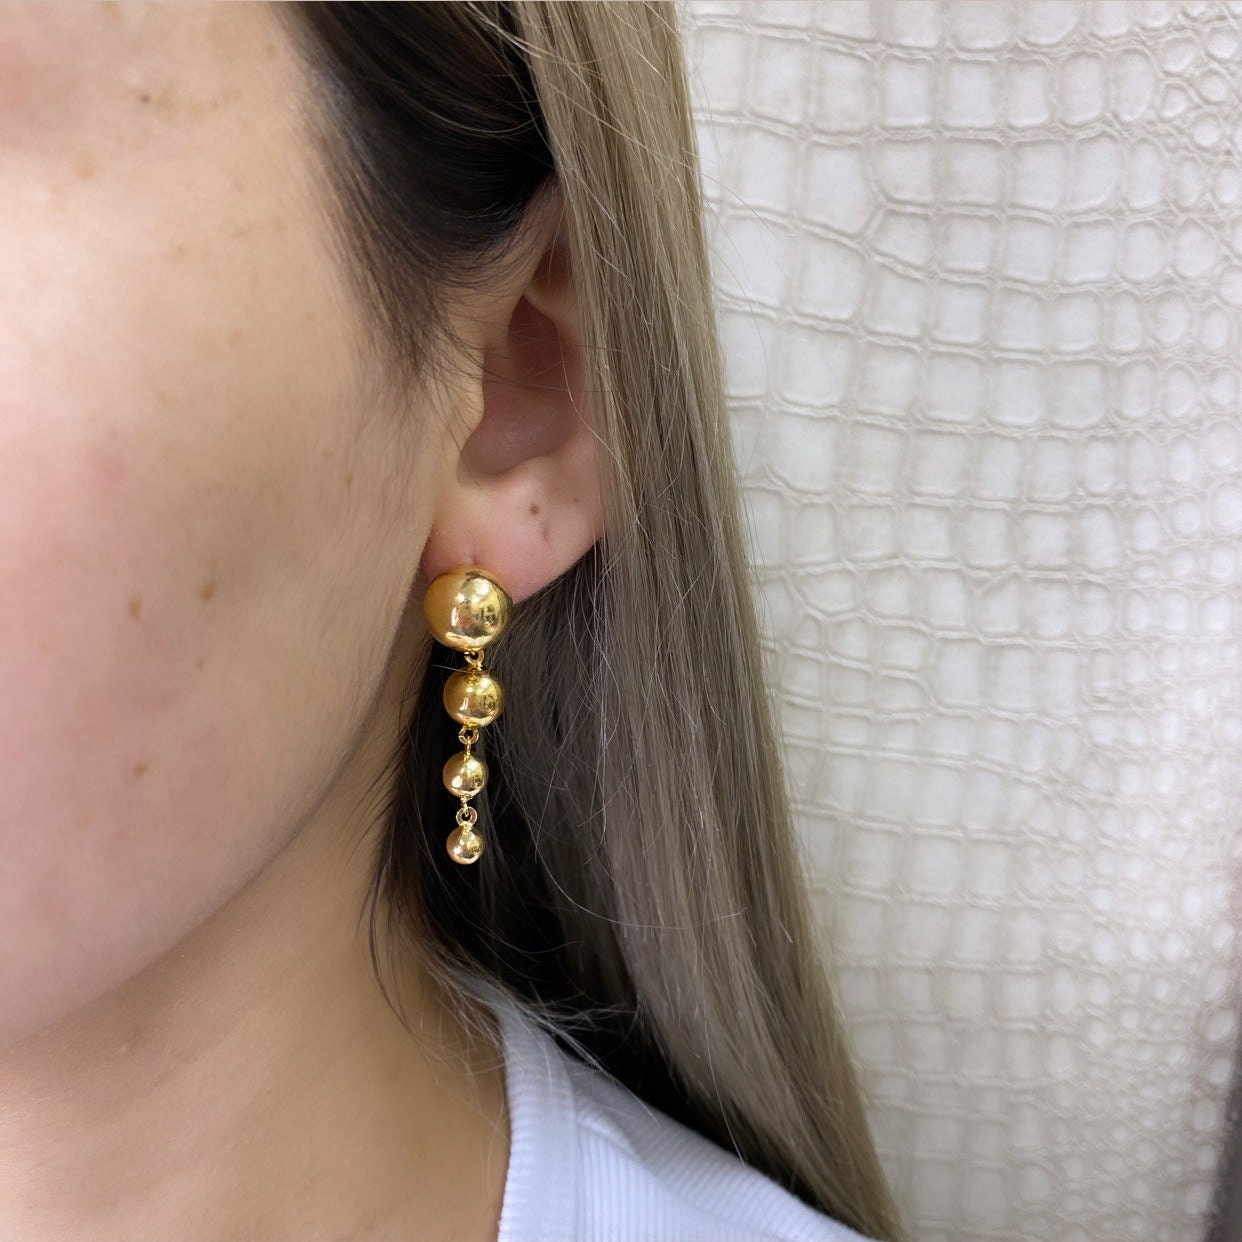 18k Gold Filled Drop Balls Earrings Wholesale Jewelry Making Supplies